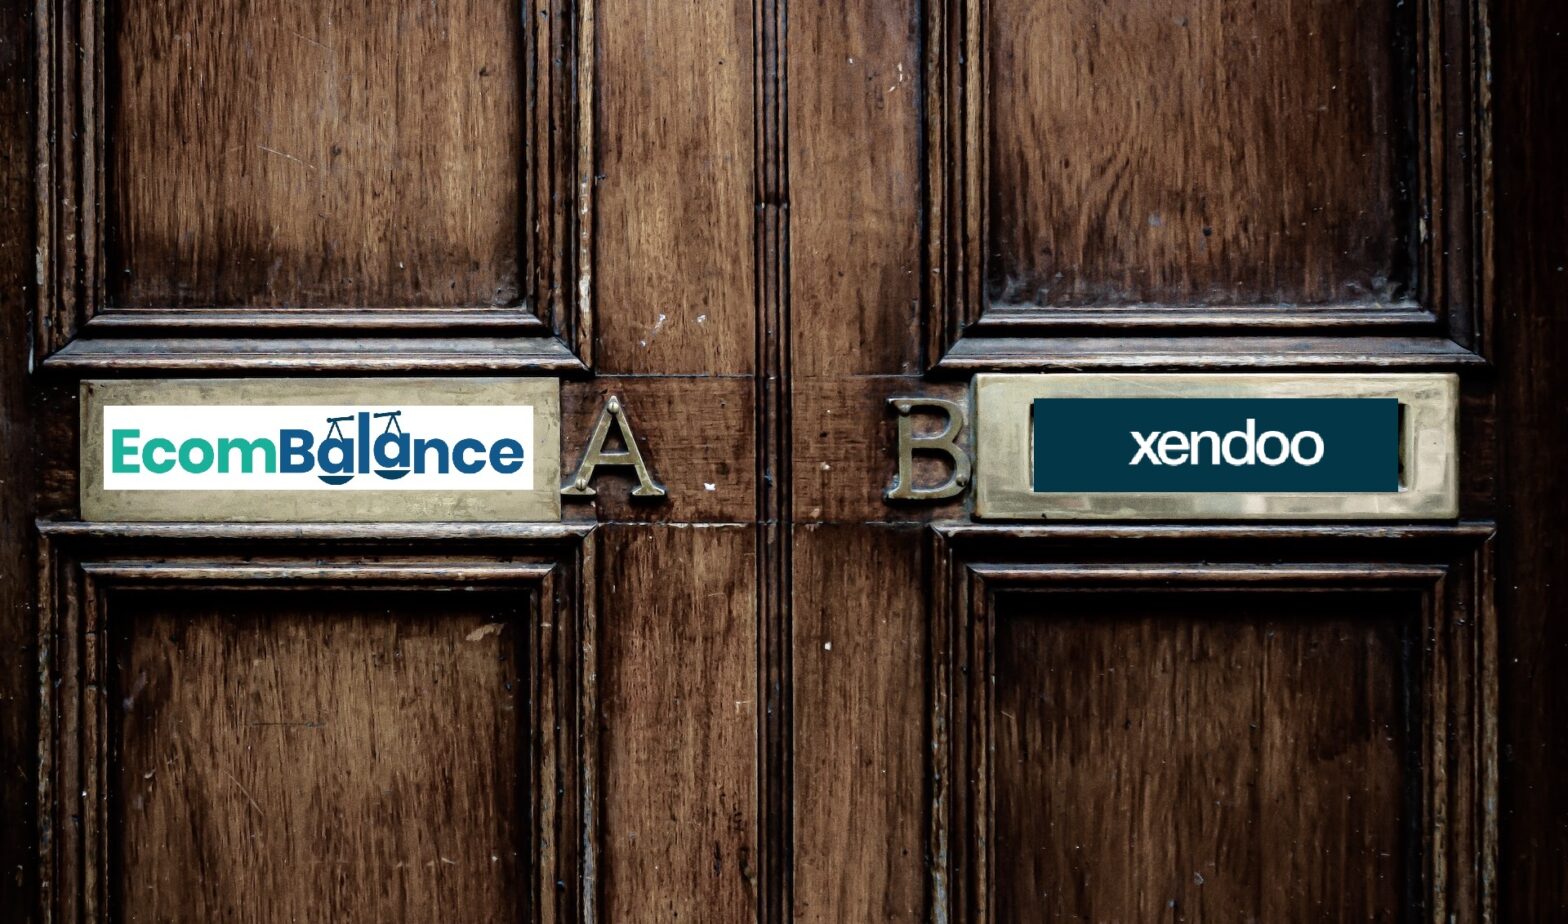 An image of two doors showing EcomBalance vs Xendoo